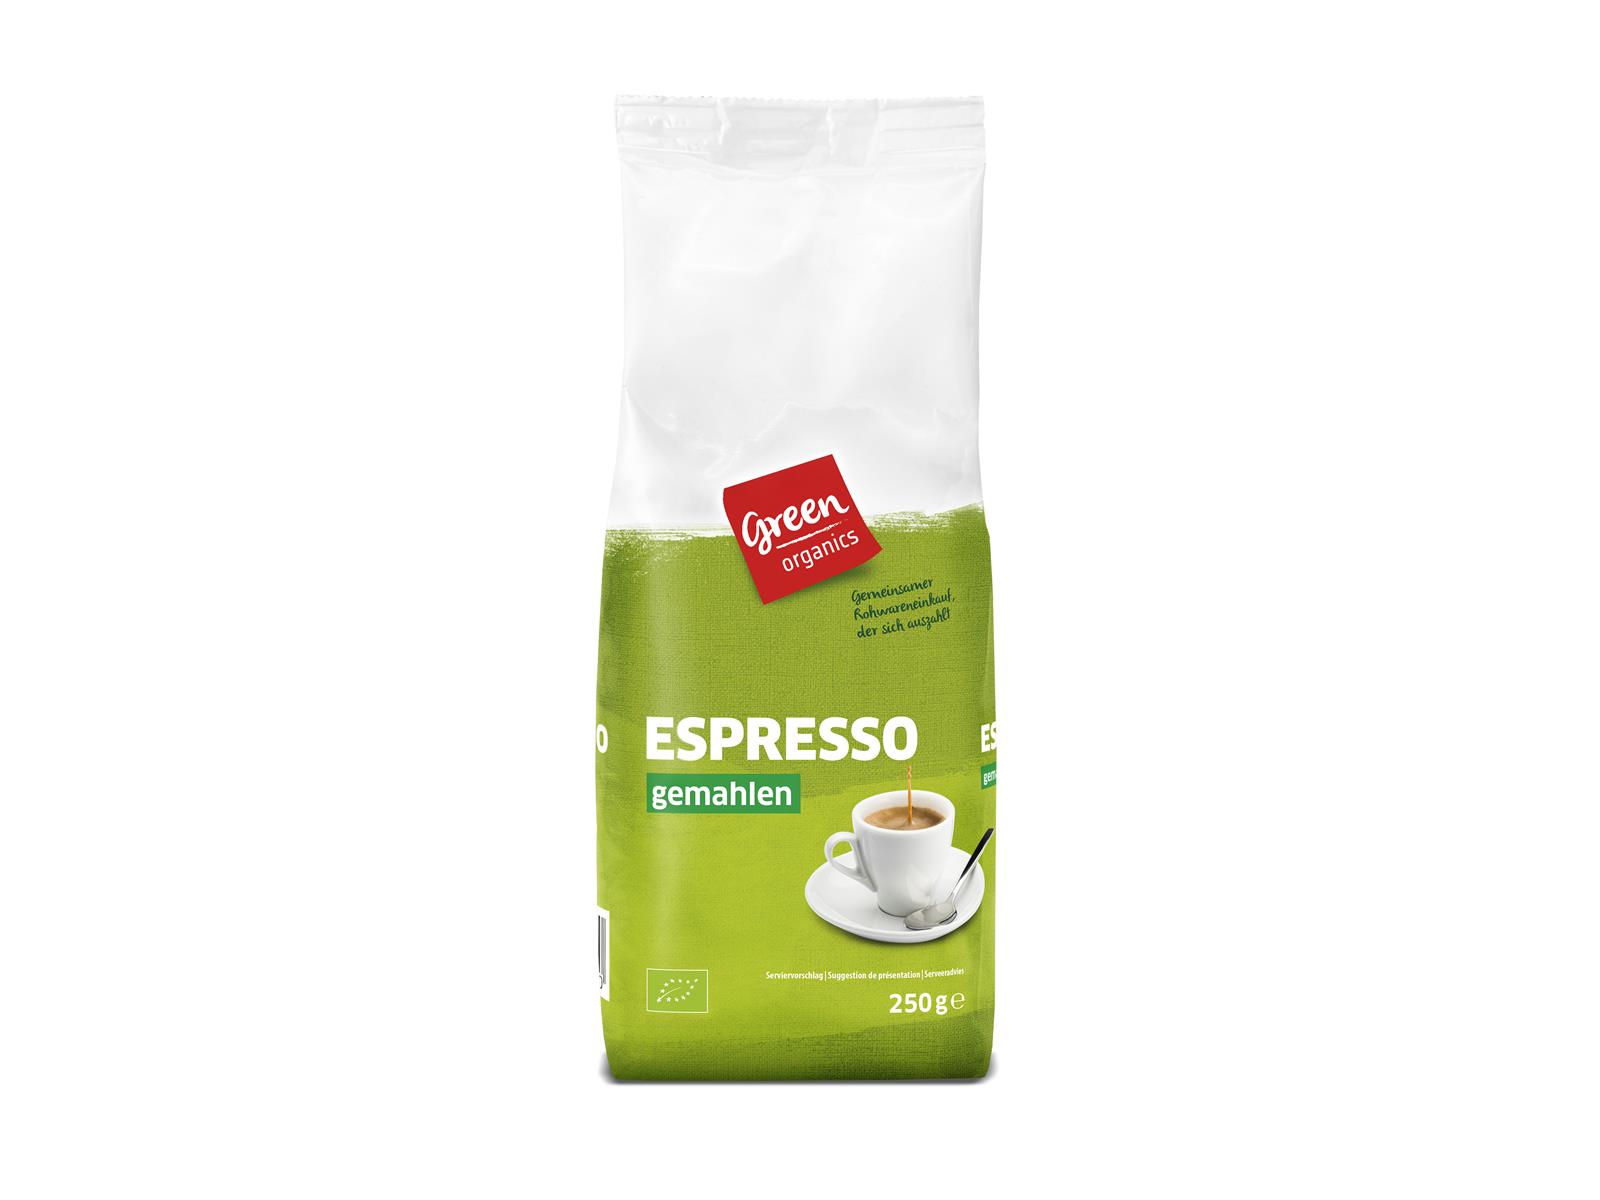 greenorganics Espresso gemahlen 250 g